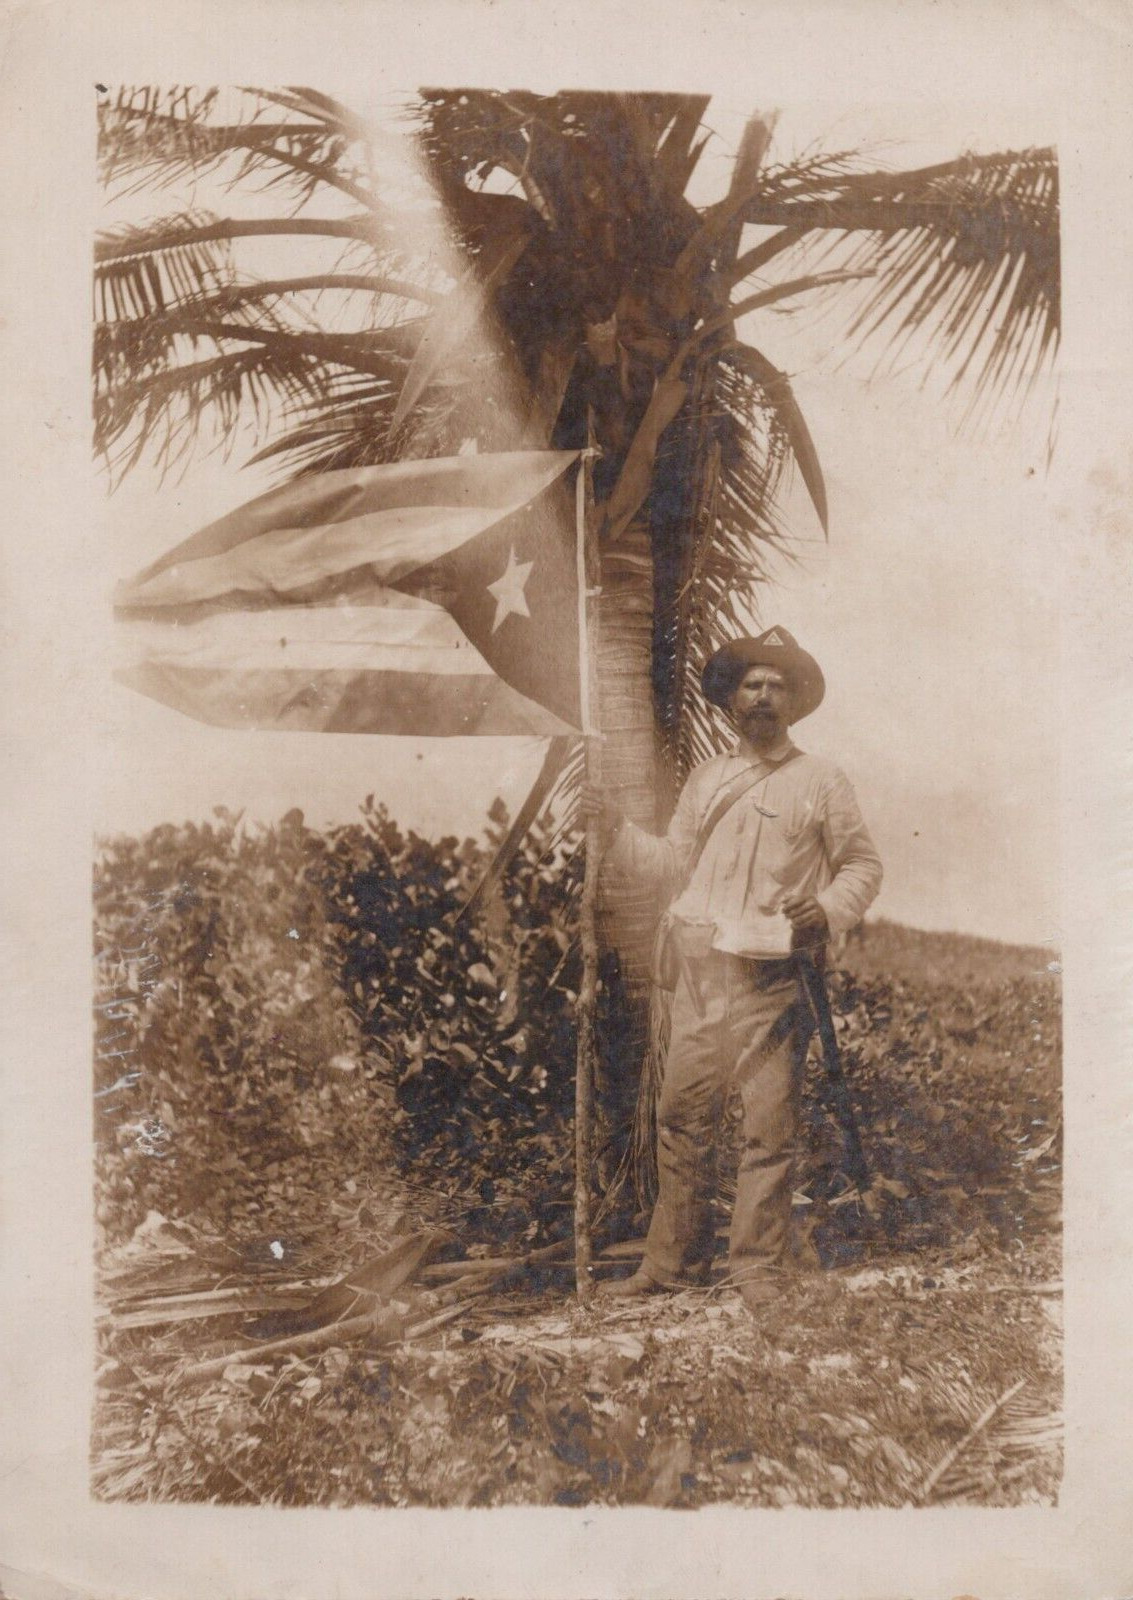 1890s CUBA CUBAN COLONEL MENDEZ SPAN AM WAR HERO FLAG ORIGINAL PHOTO 151